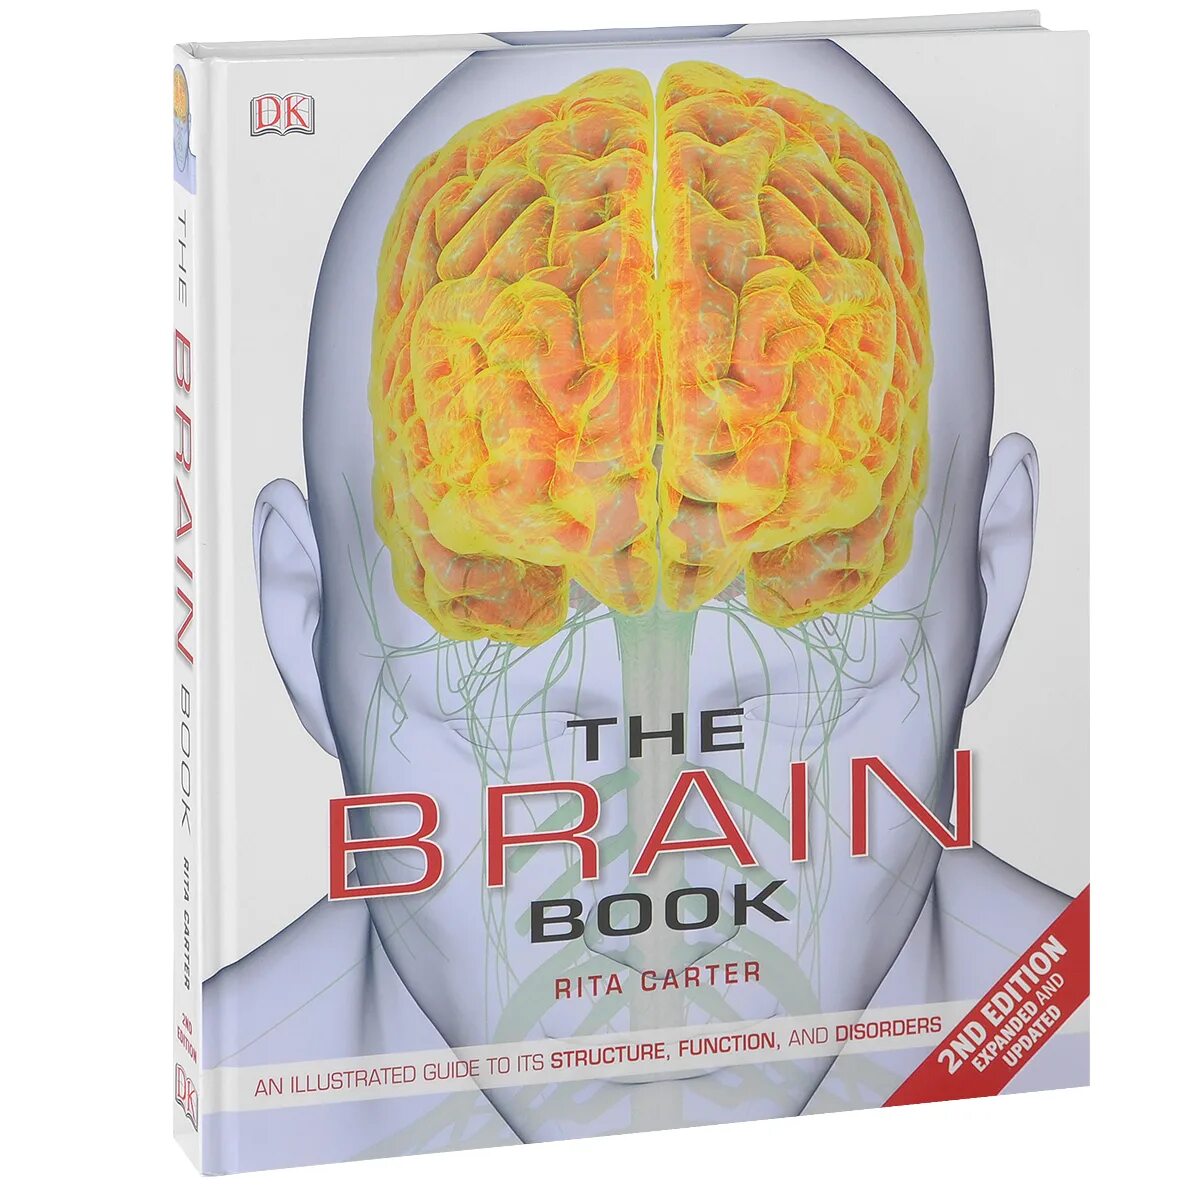 Book brain. Книга мозг. Книга про мозг человека. Книга мозг the Brain. Том Вуджек книги.